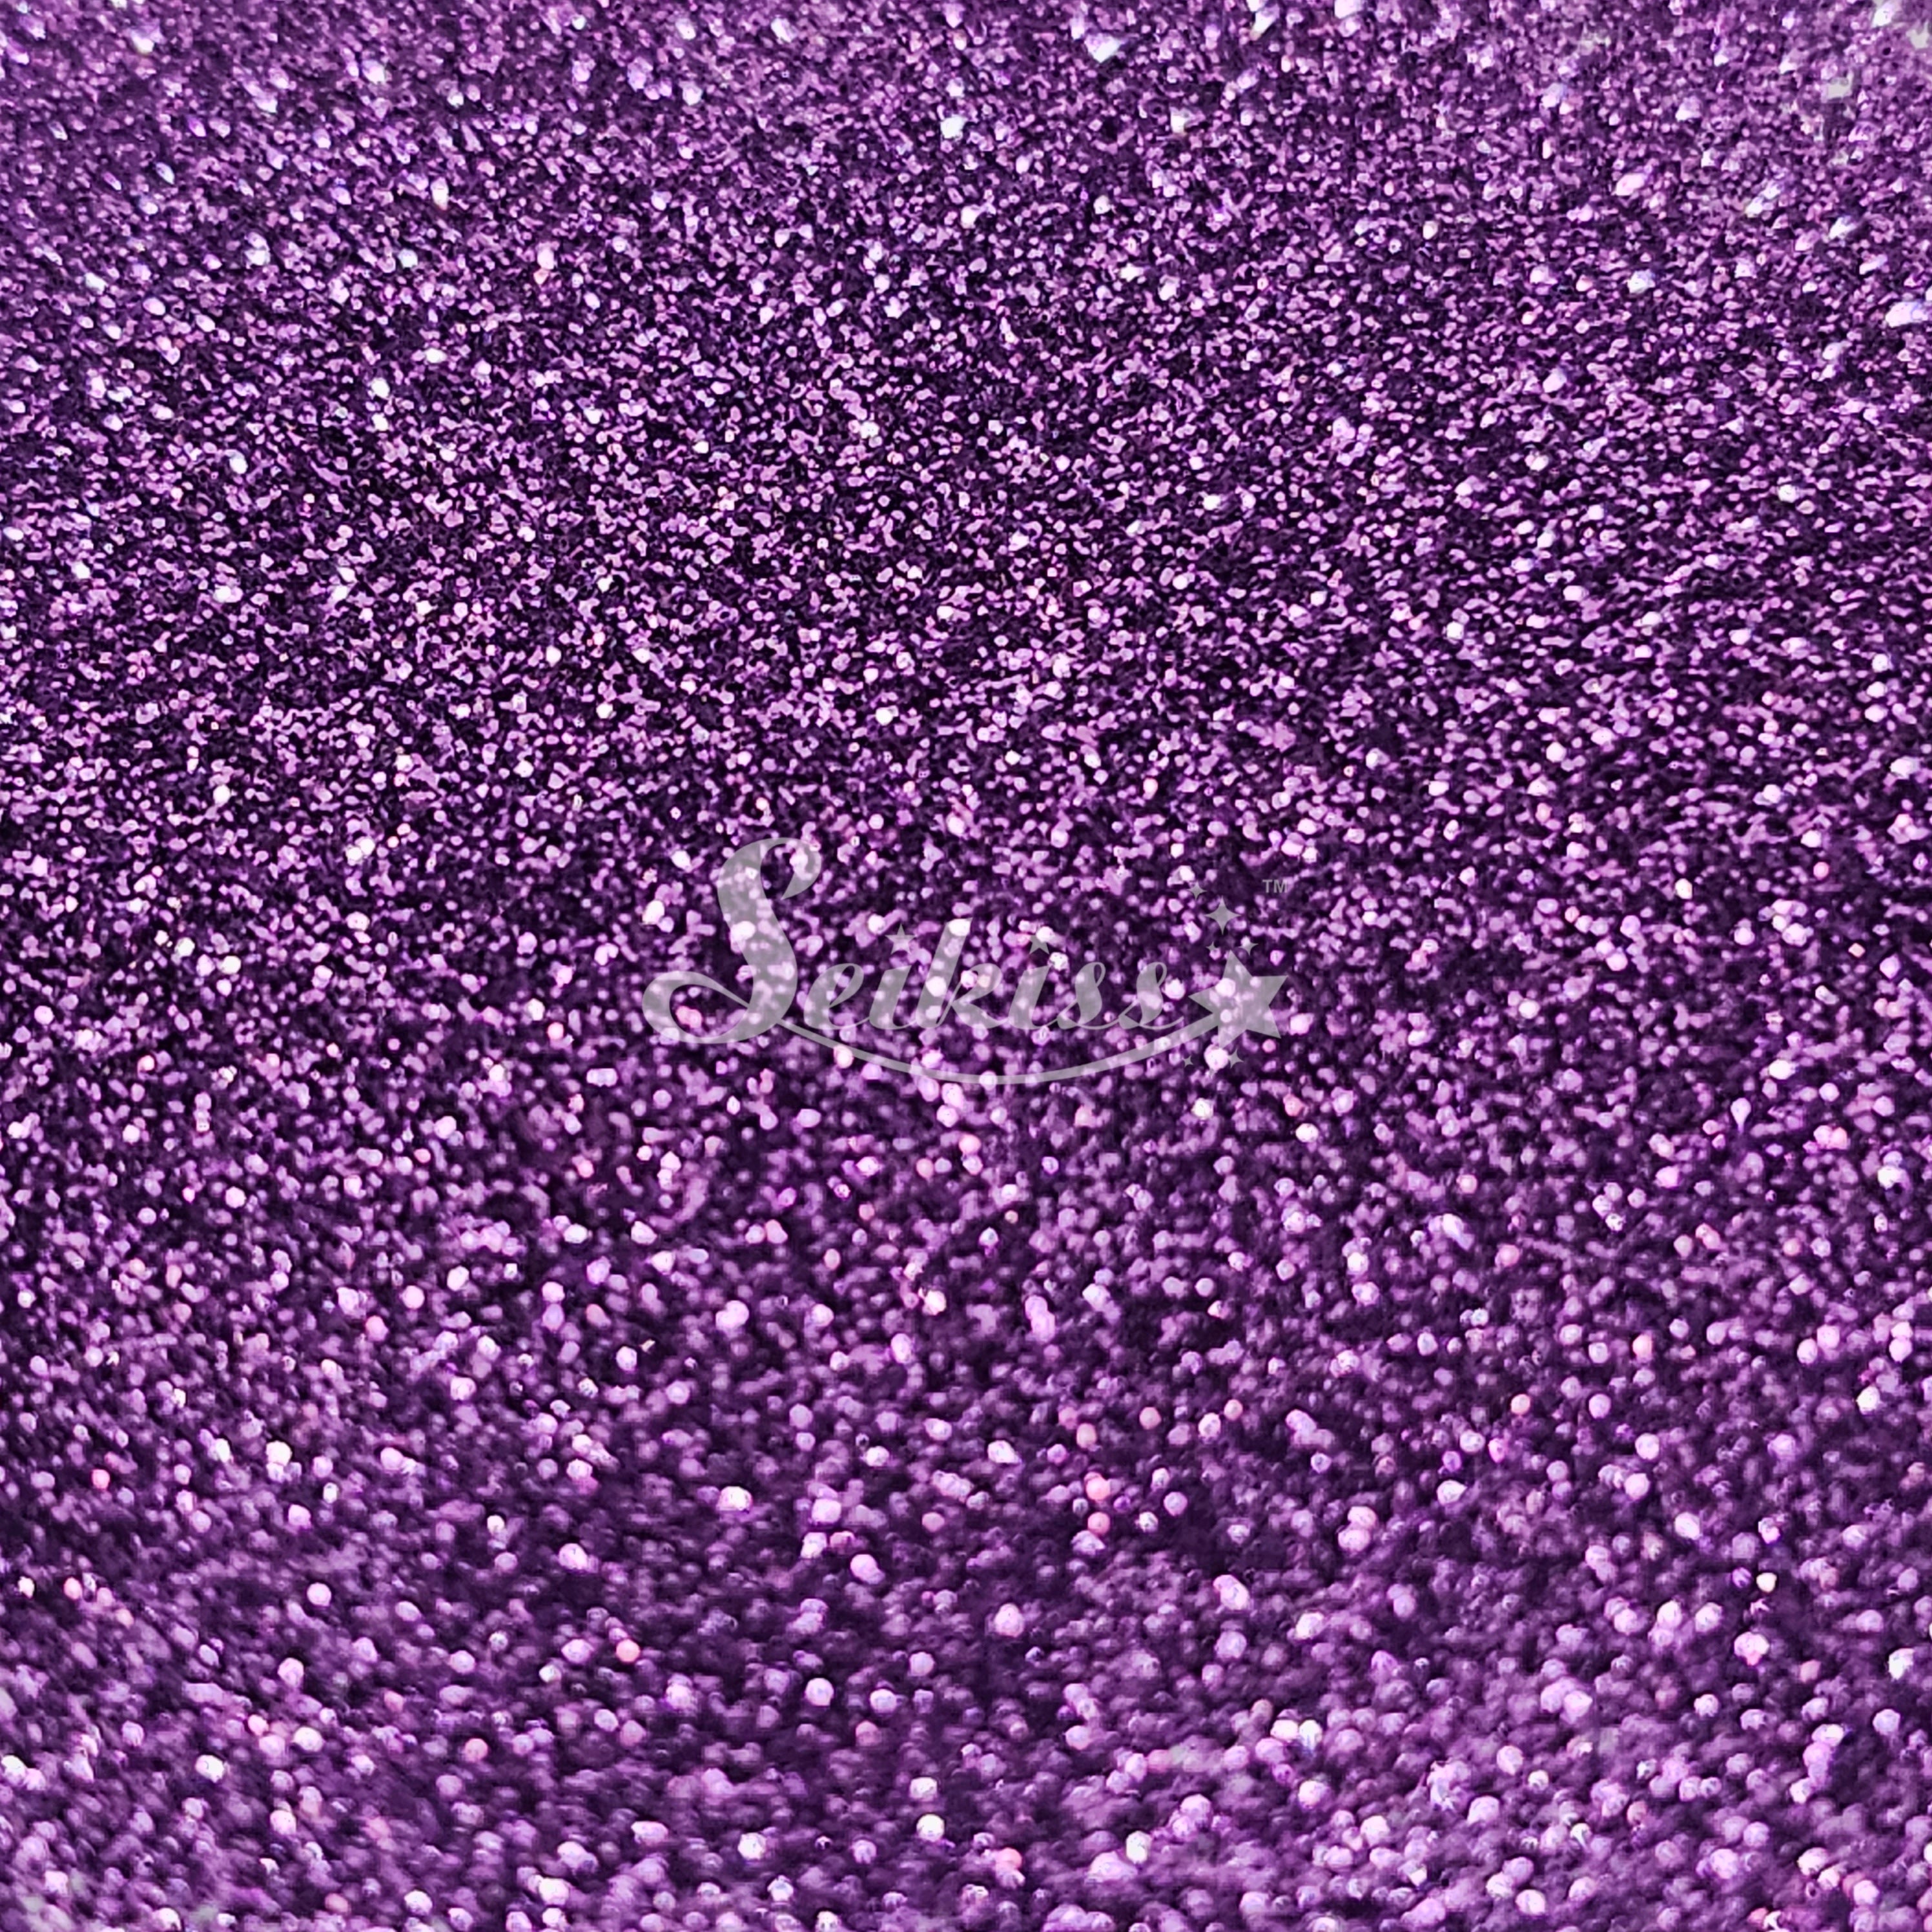 Violet Metallic Fine Glitter - Purple Glitter